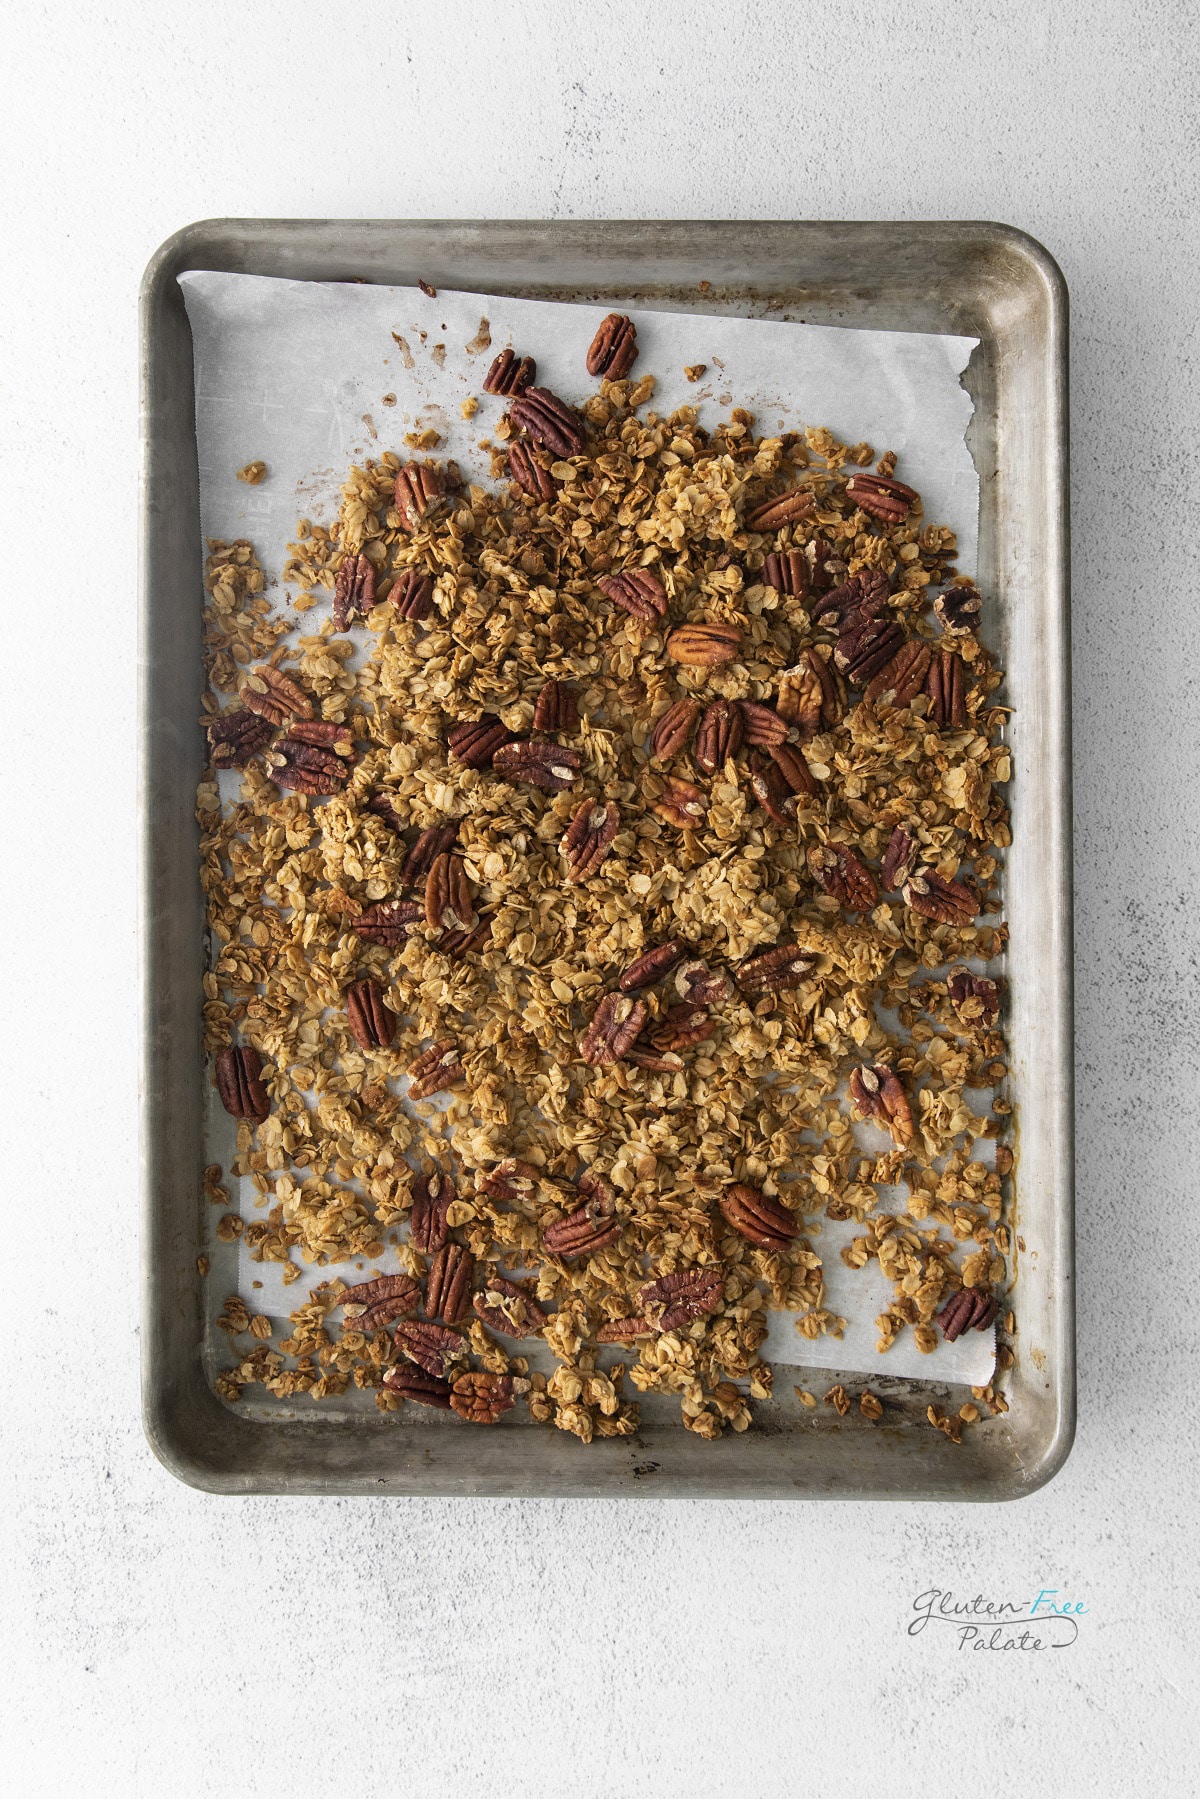 maple granola on a baking pan